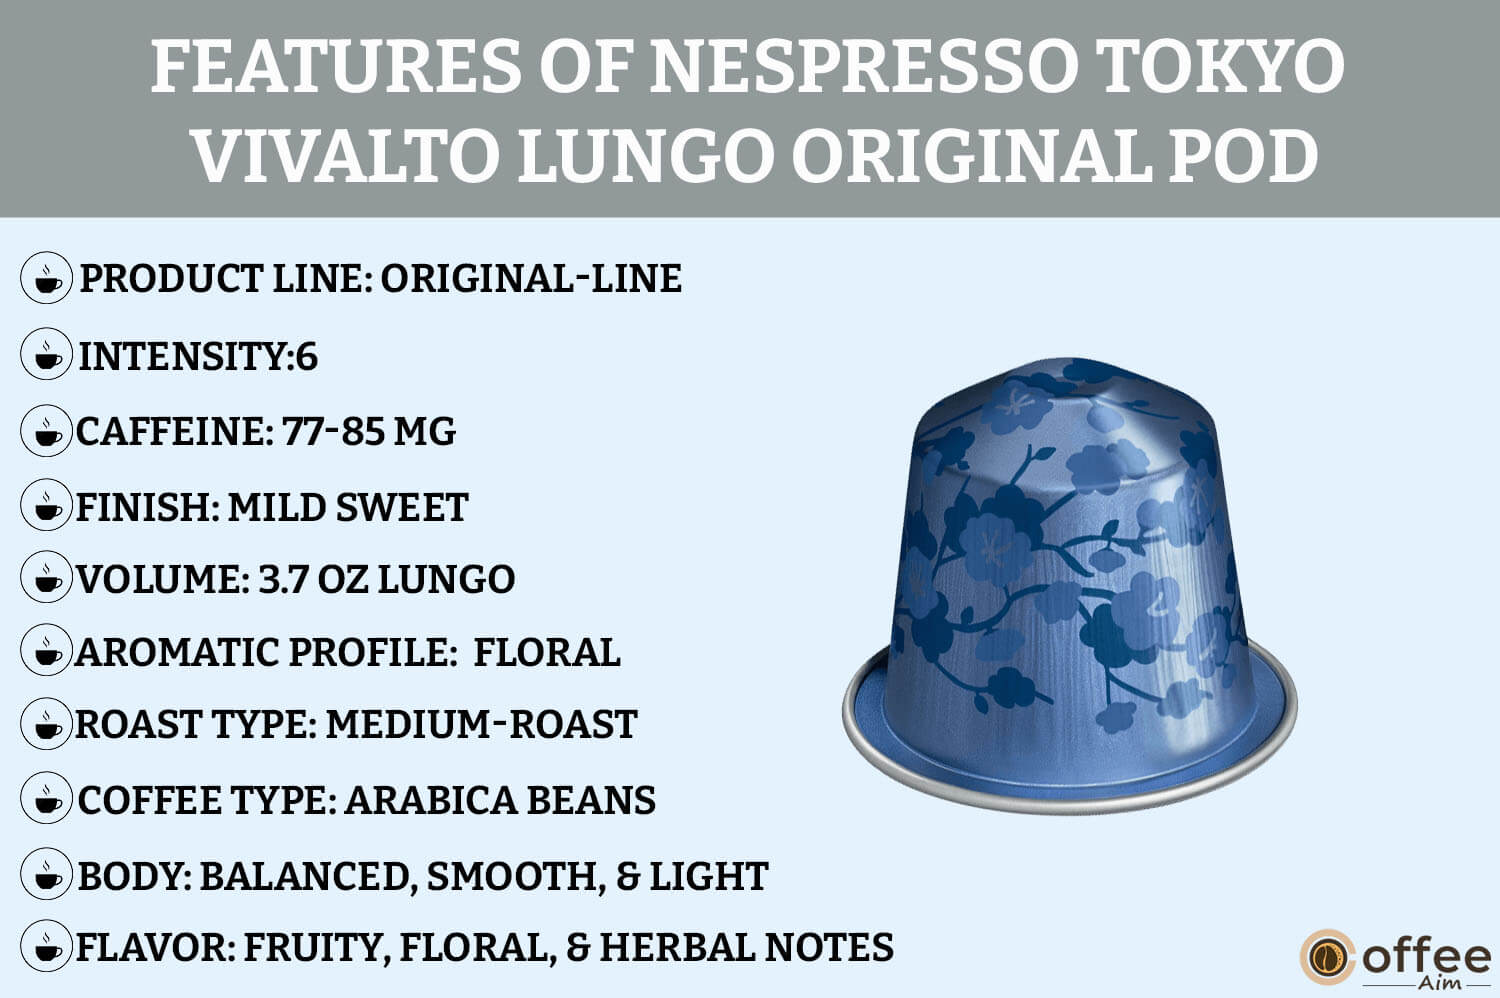 "Image showcases Nespresso Tamuka Mu Zimbabwe Vertuo Pod features for 'Nespresso Tokyo Vivalto Lungo Original-Line Pod' article."